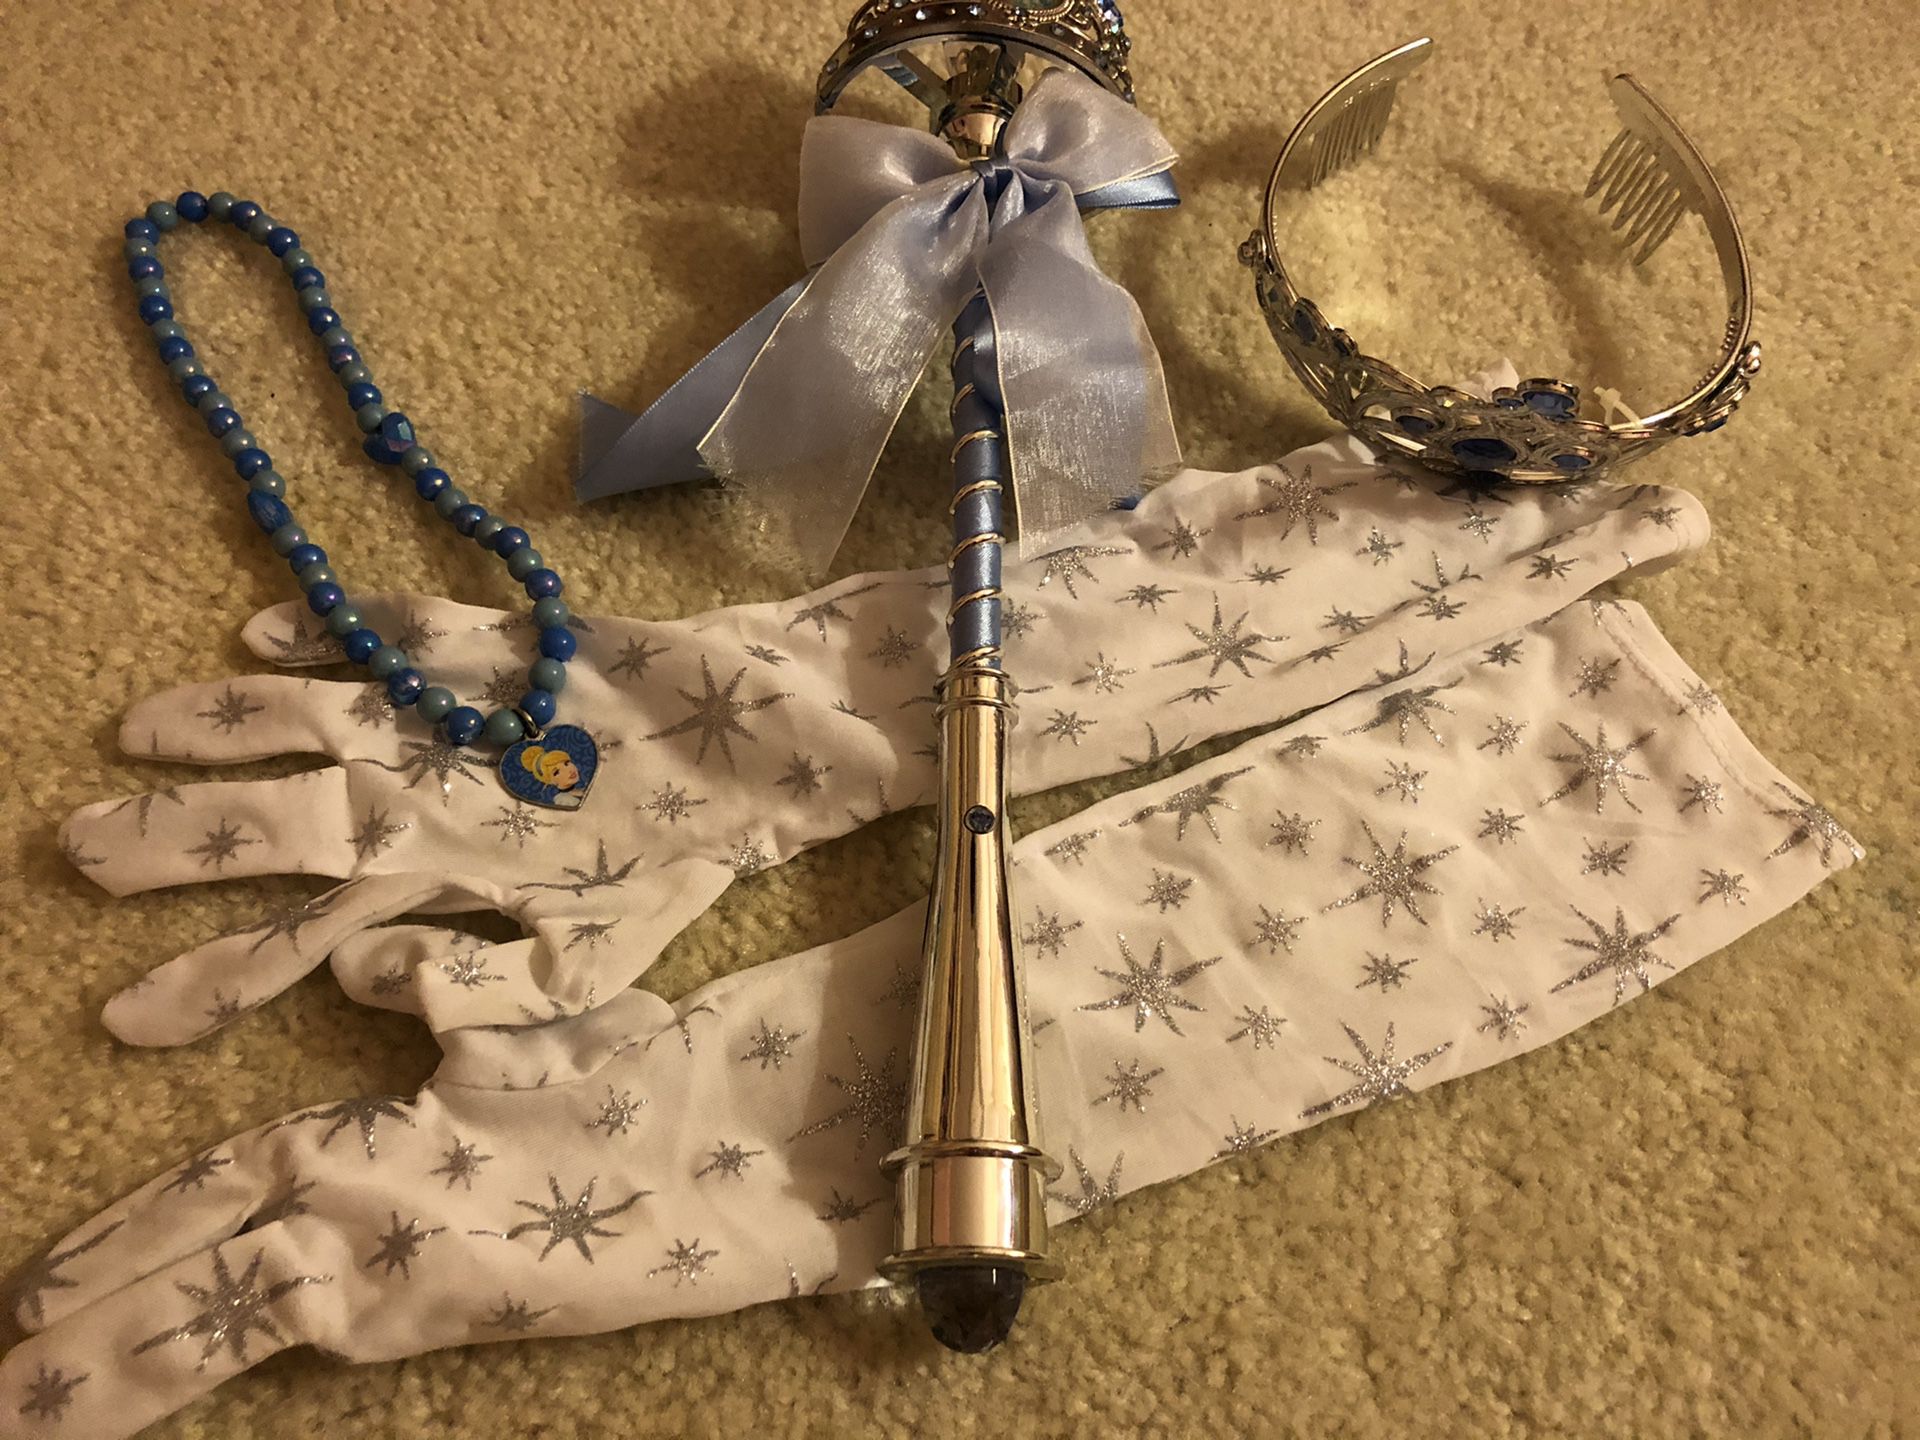 Disney Princess Cinderella costume accessories